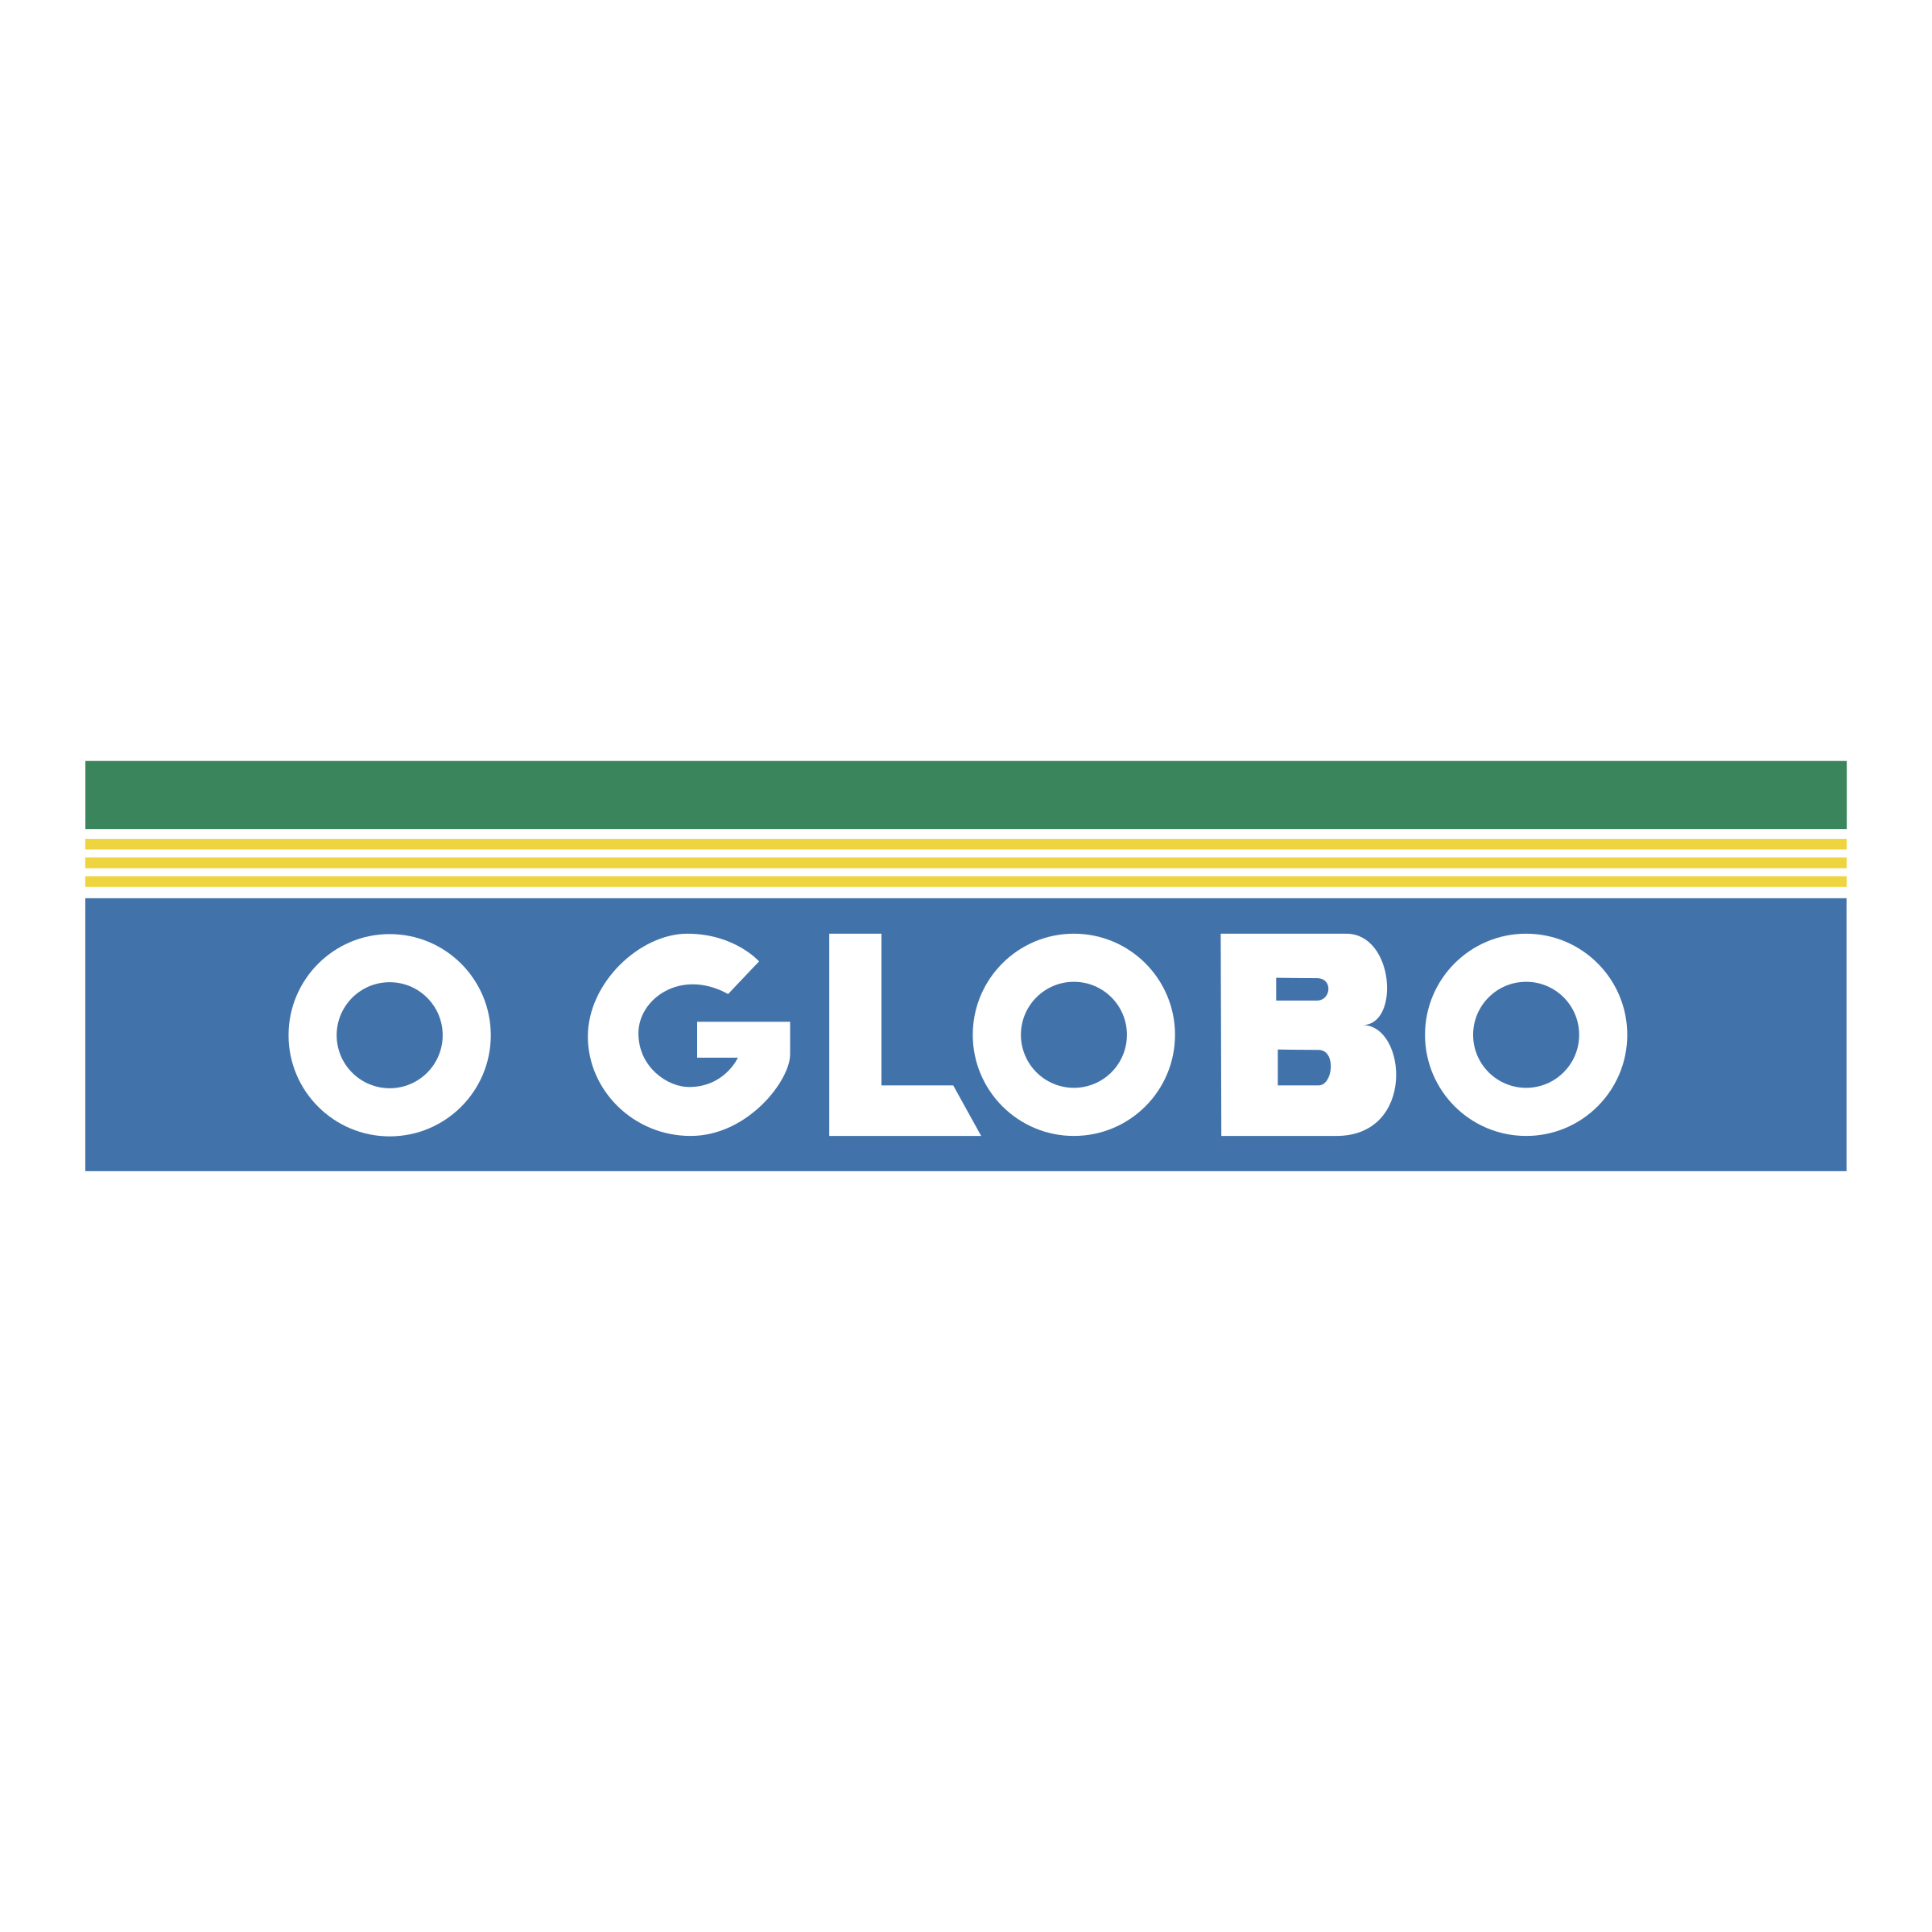 Globo Logo - O Globo Logo PNG Transparent & SVG Vector - Freebie Supply